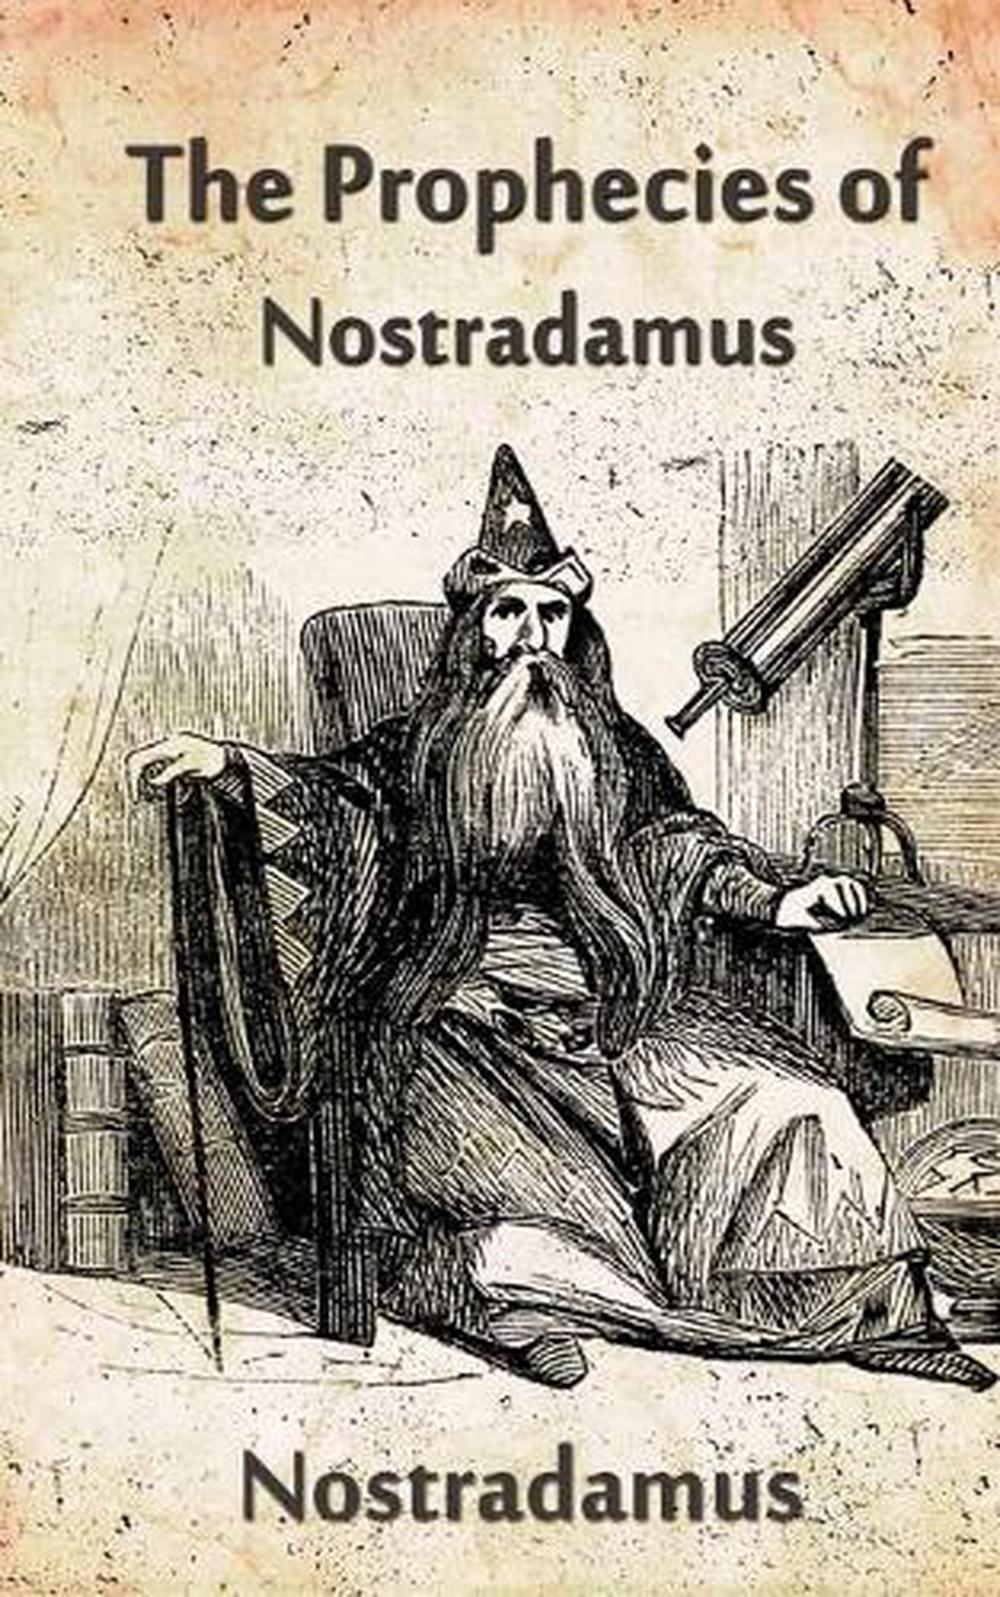 Prophecies of Nostradamus by Nostradamus (English) Paperback Book Free